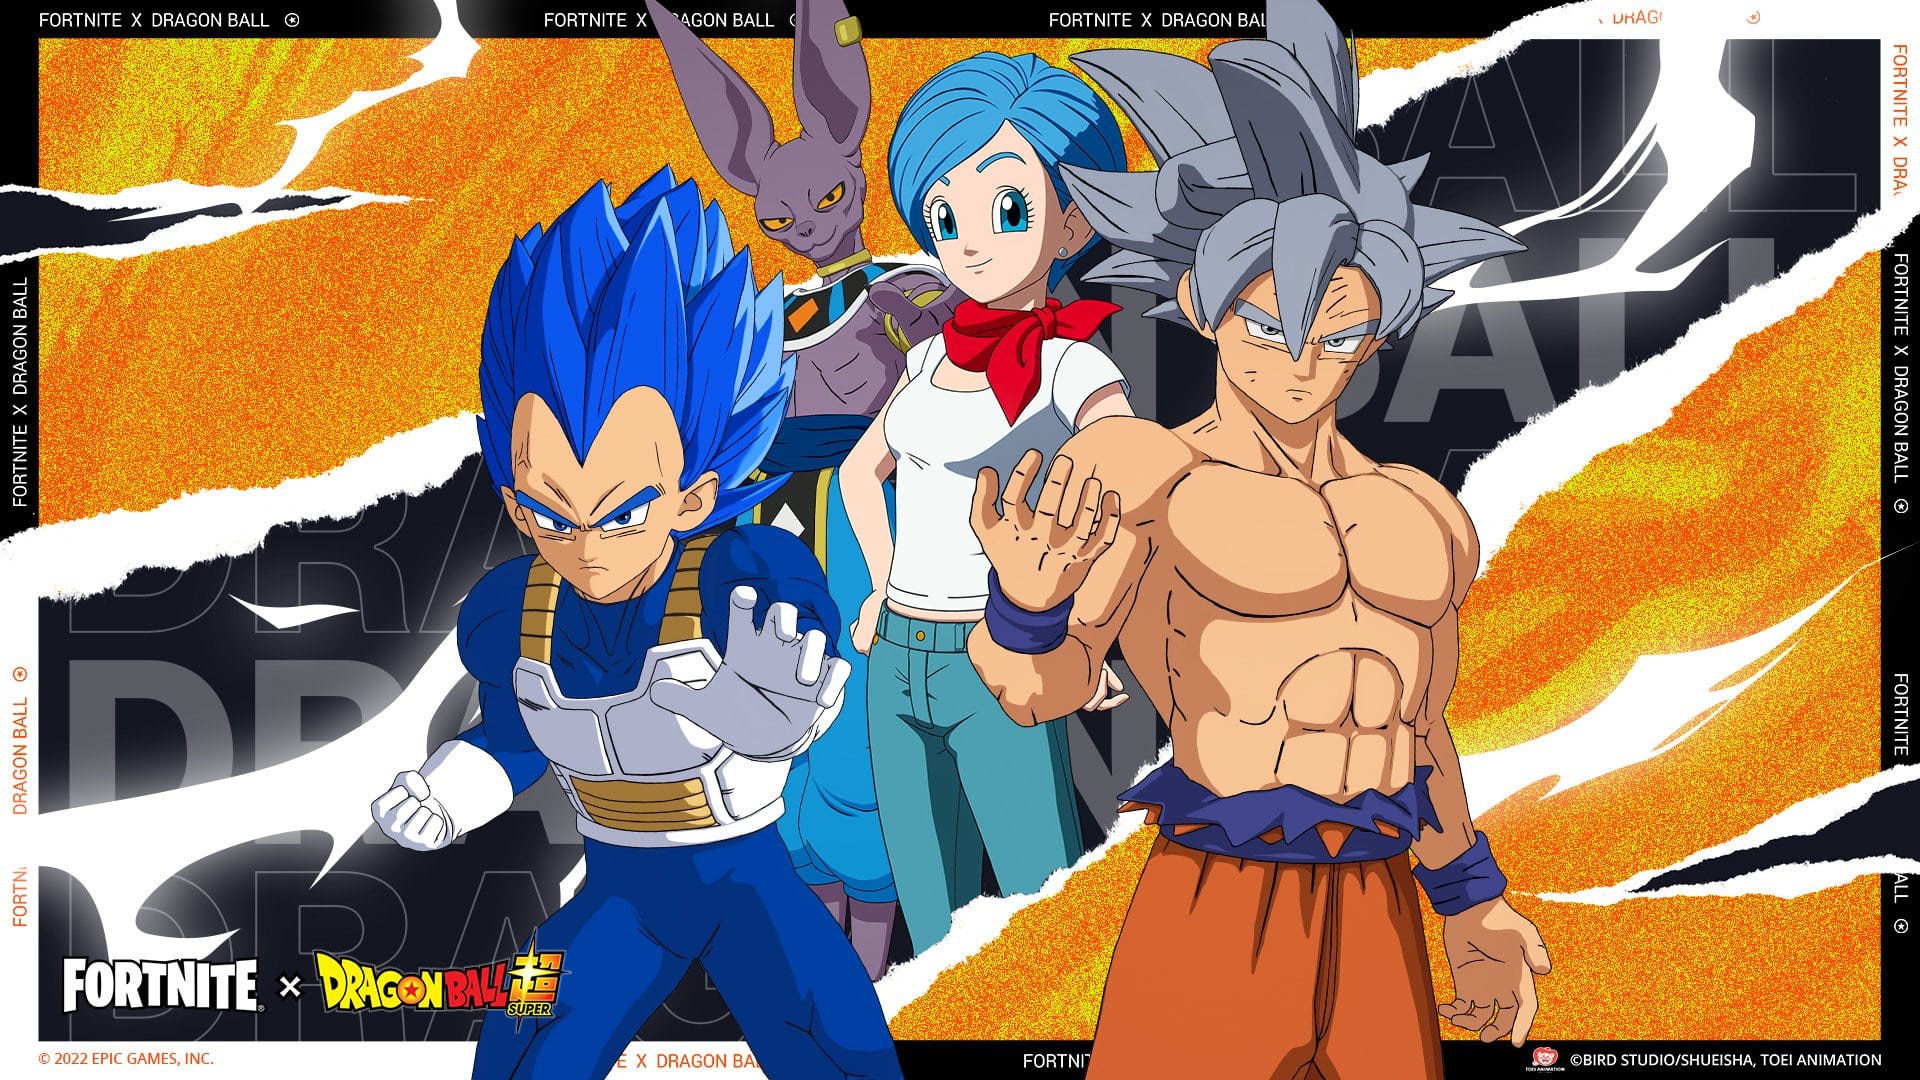 Fortnite x Dragon Ball Features Son Goku, Vegeta, and More